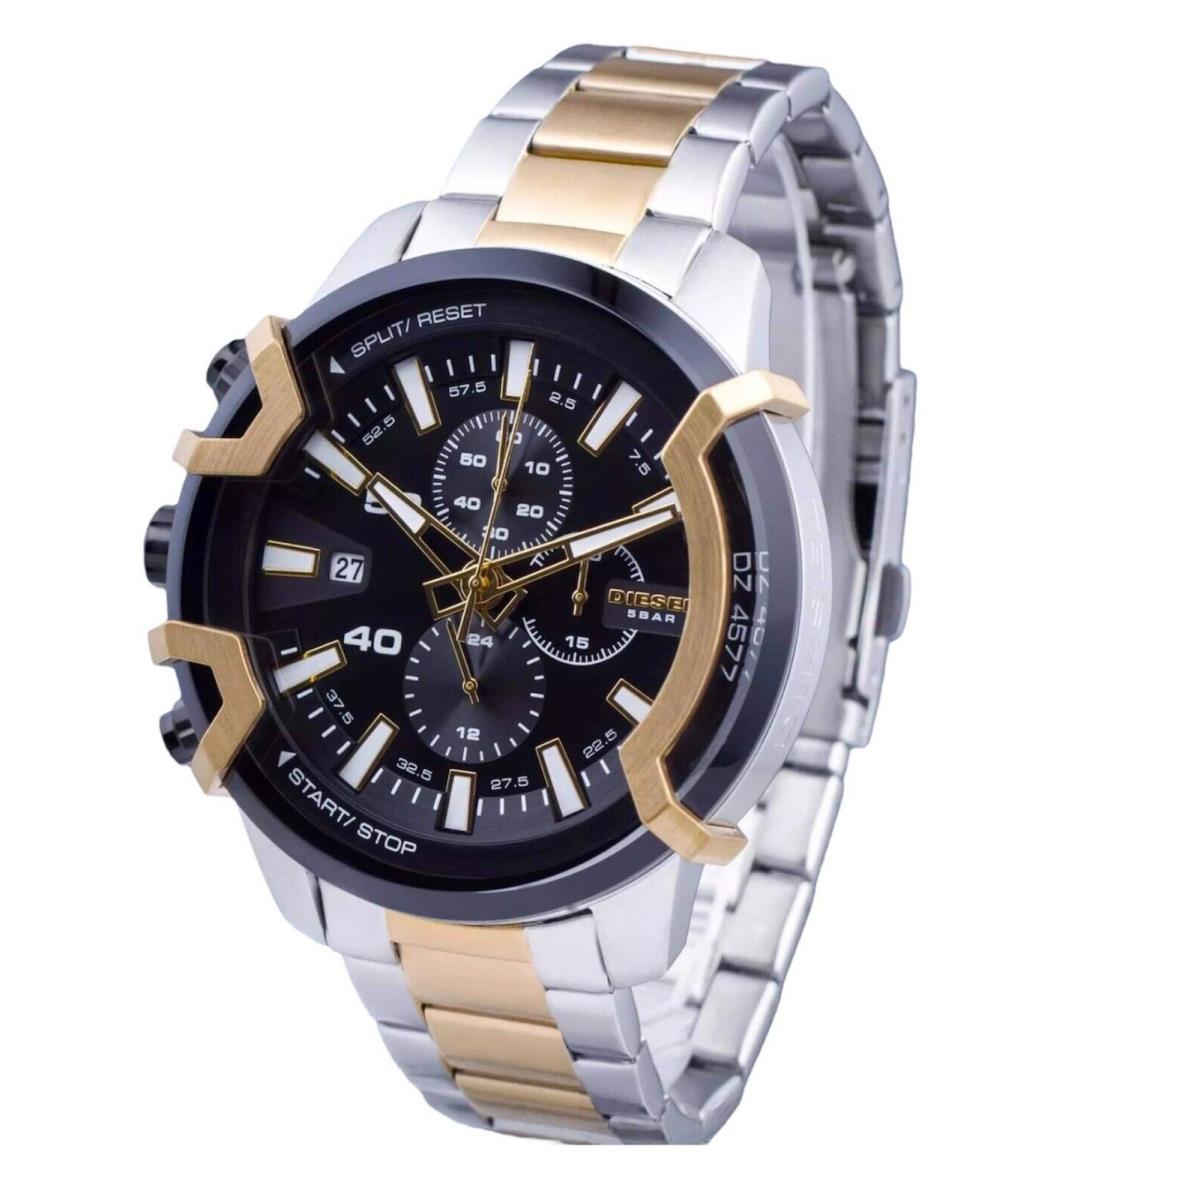 Diesel Griffed Chronograph Two-tone Stainless Diesel watch Watch 698615123711 - Steel Fash Brands | - DZ4577